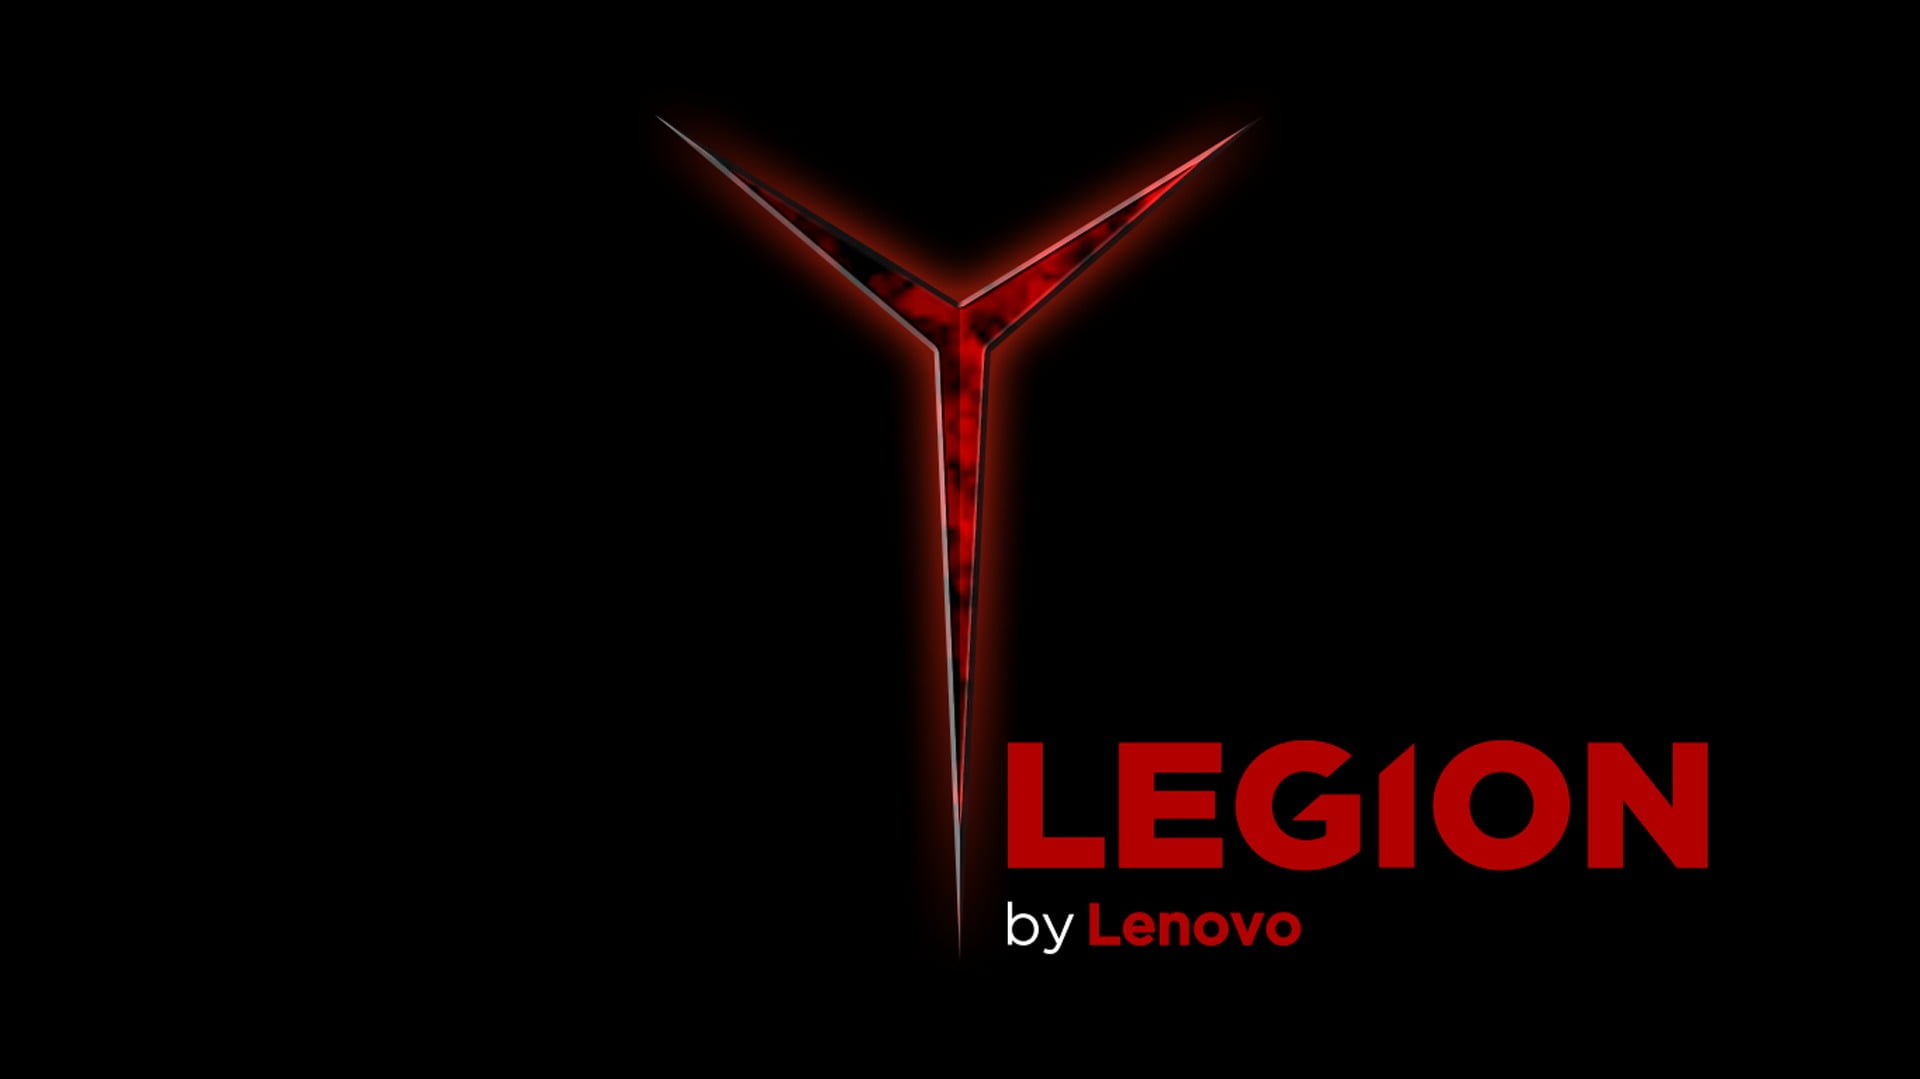 Lenovo Wallpaper, Lenovo Legion, PC Gaming, Red, Illuminated, Black  Background - Wallpaperforu